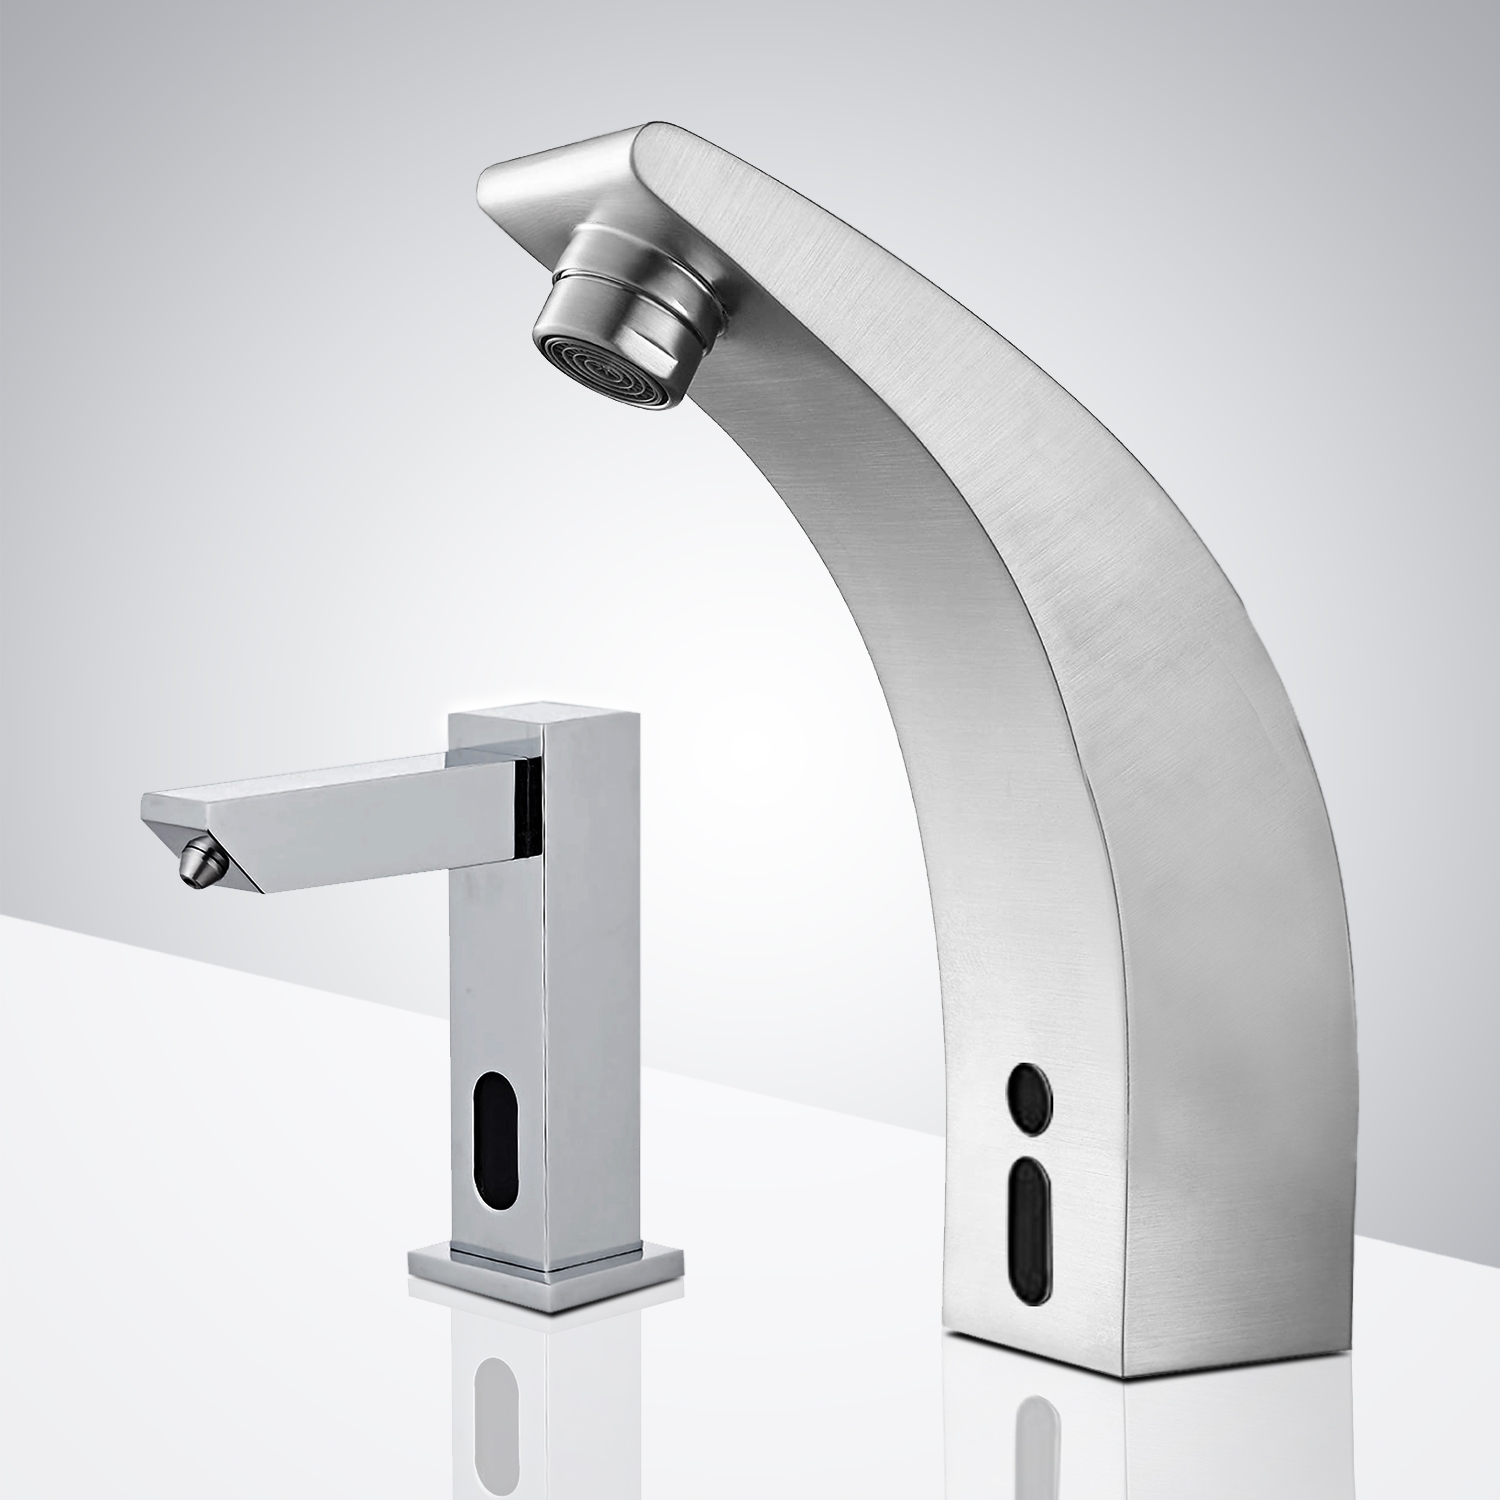 Fontana Verona High Quality Commercial Motion Sensor Faucet & Automatic Liquid Soap Dispenser for Restrooms